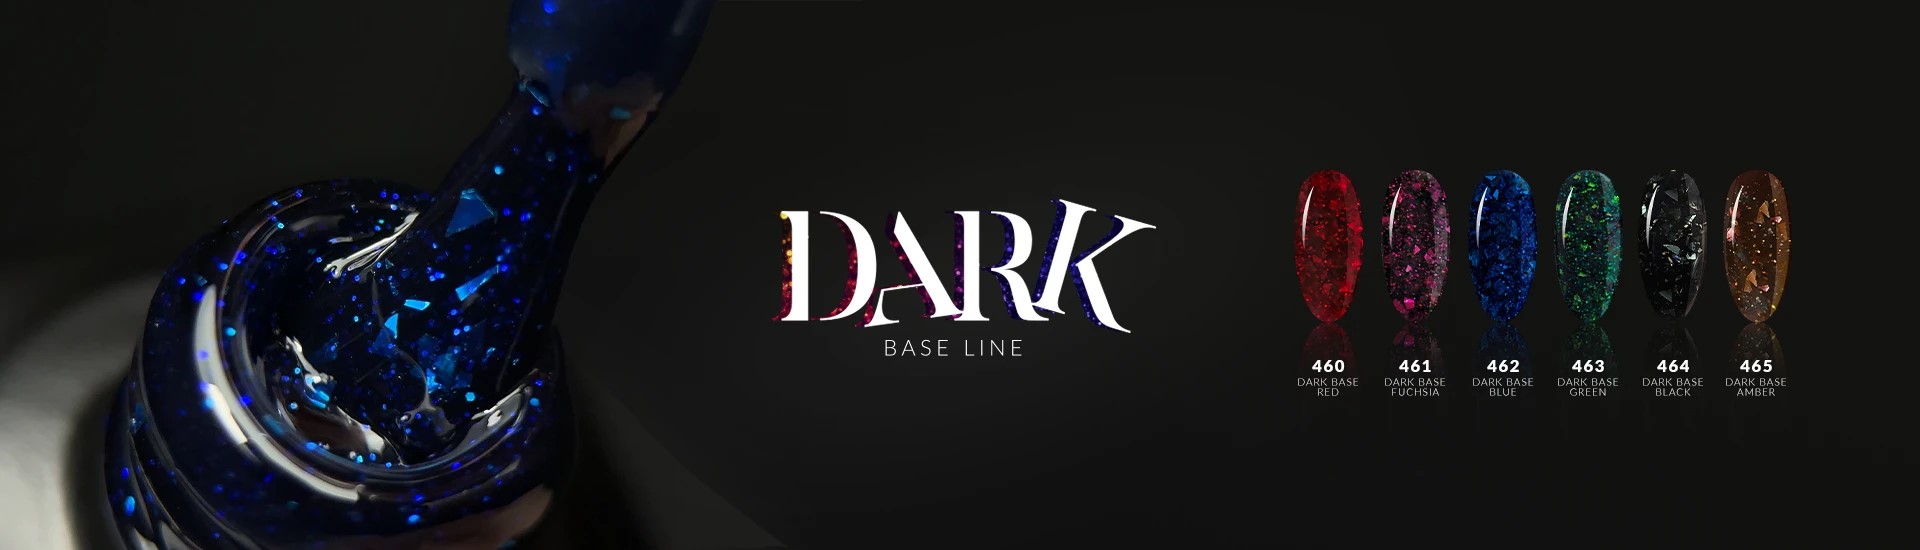 Dark Base Cover Line